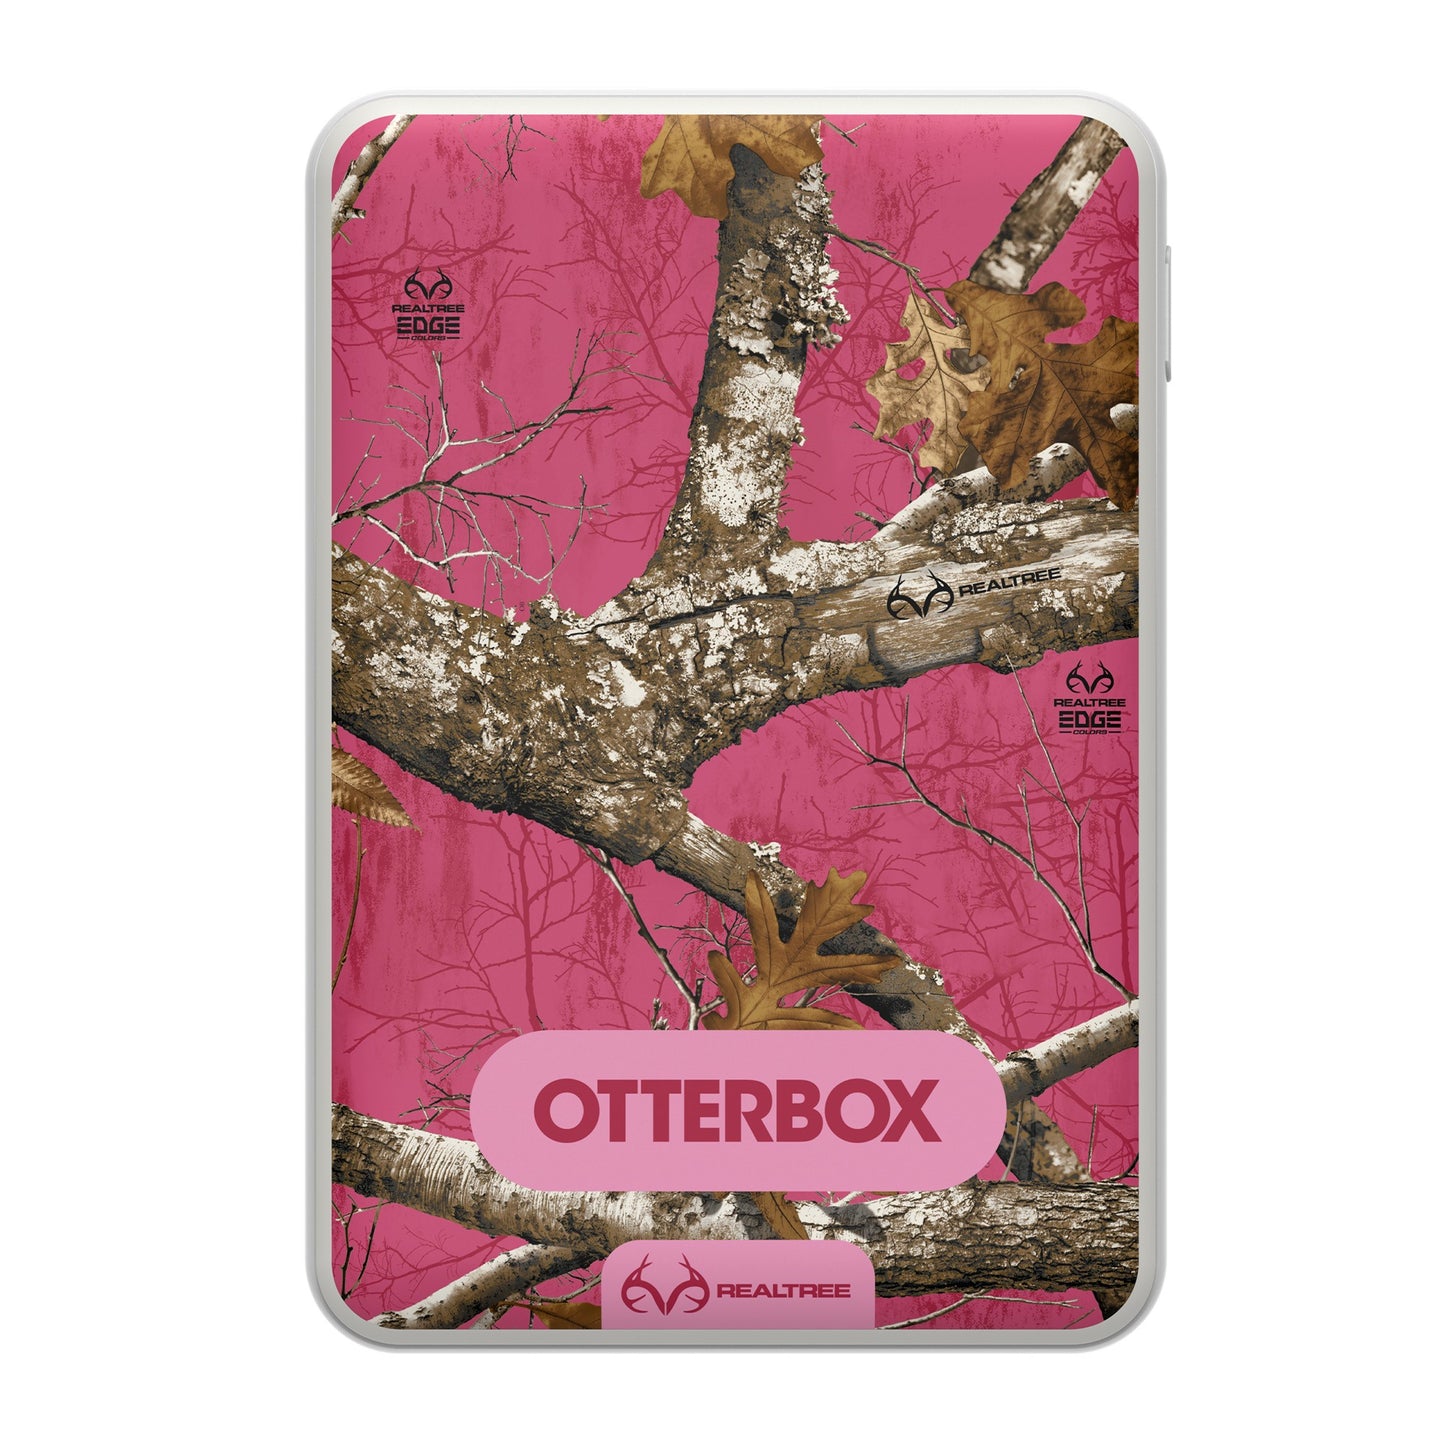 Otterbox 5,000 mAh 3-in-1 Portable Power Bank Mobile Charging Kit - White (Realtree Flamingo) - 15-12099